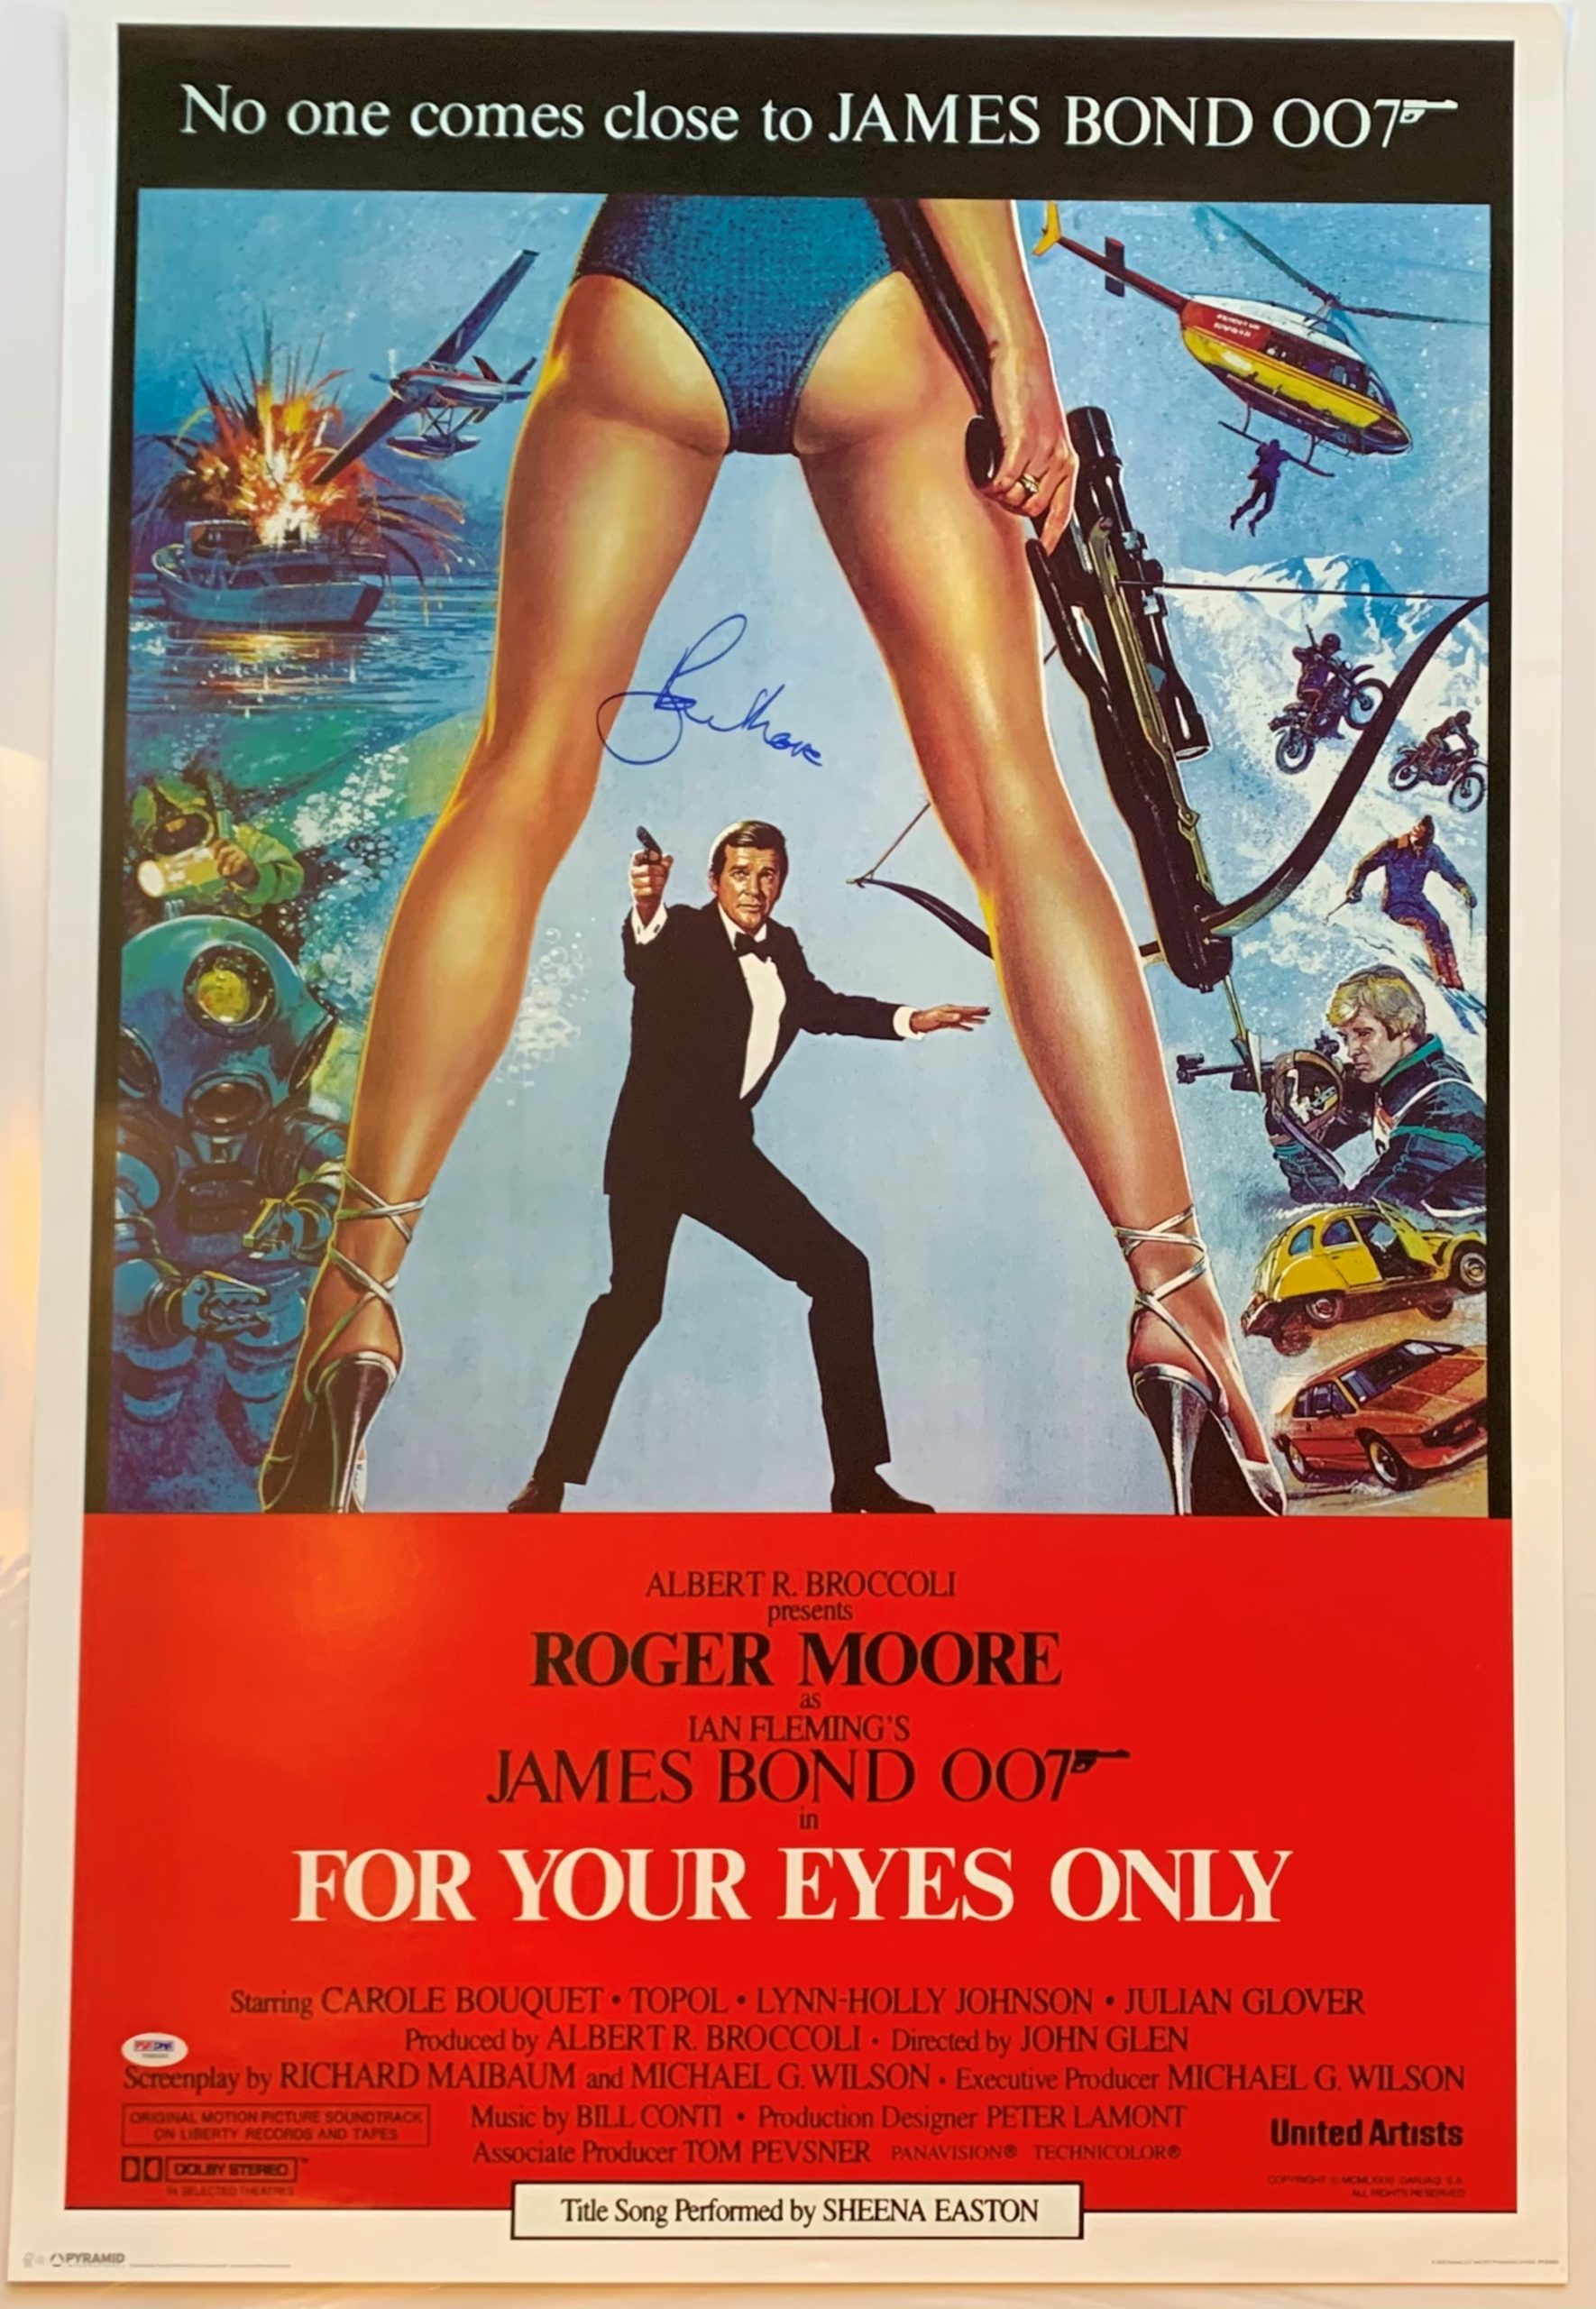 Autograph Signed James Bond 007 Goldeneye Poster COA 